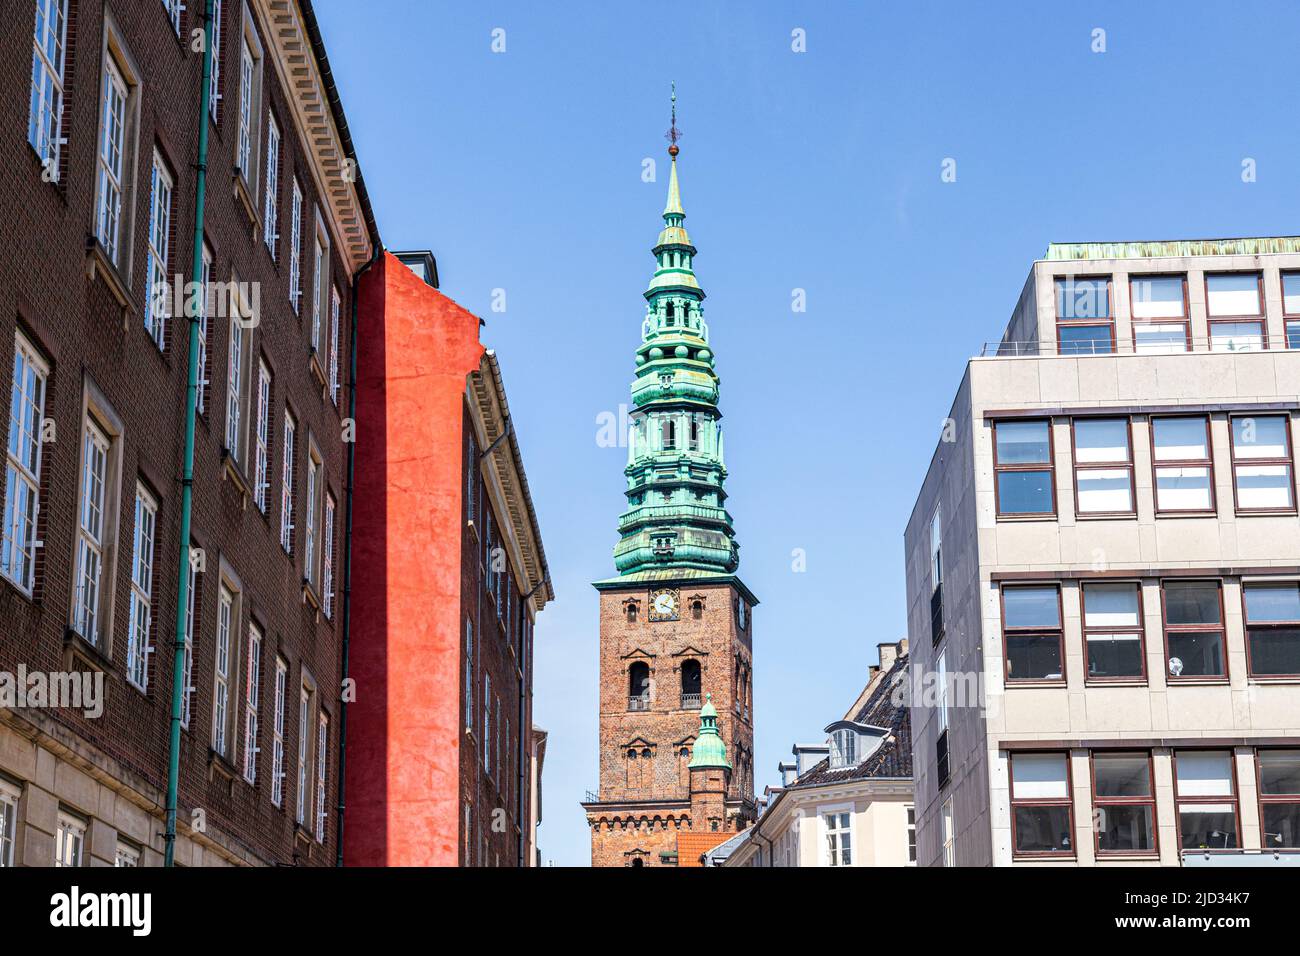 The old tower and spire of the Nikolaj Contemporary Art Center (Kunsthallen Nikolaj) seen through more modern buildings in Copenhagen, Denmark Stock Photo